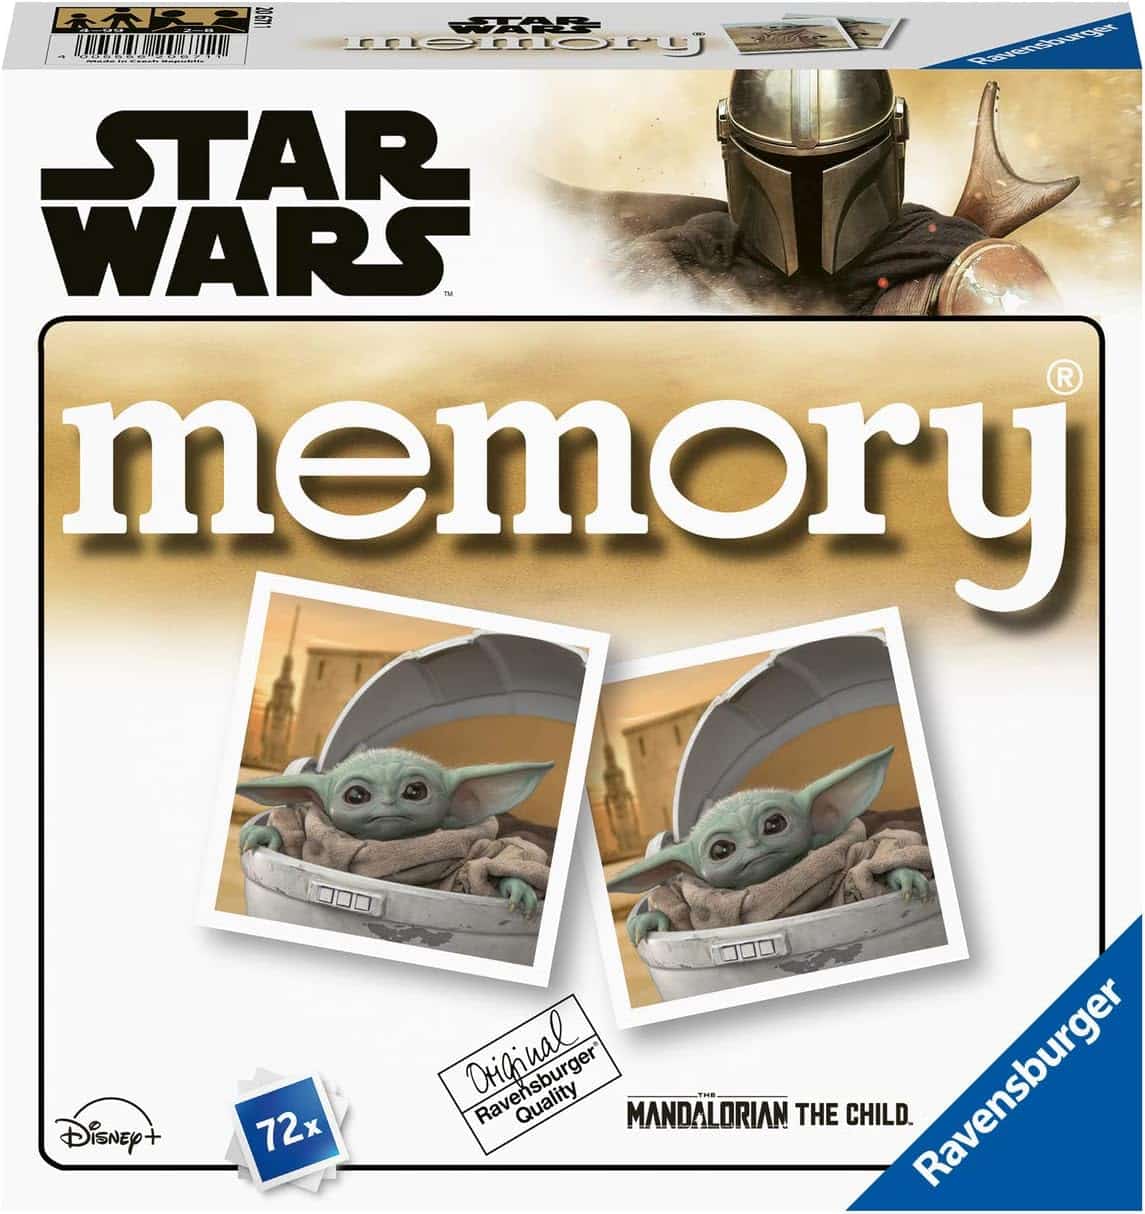 🌌 STAR WARS The Mandalorian Memory für 8,49€ (statt 12,48€)